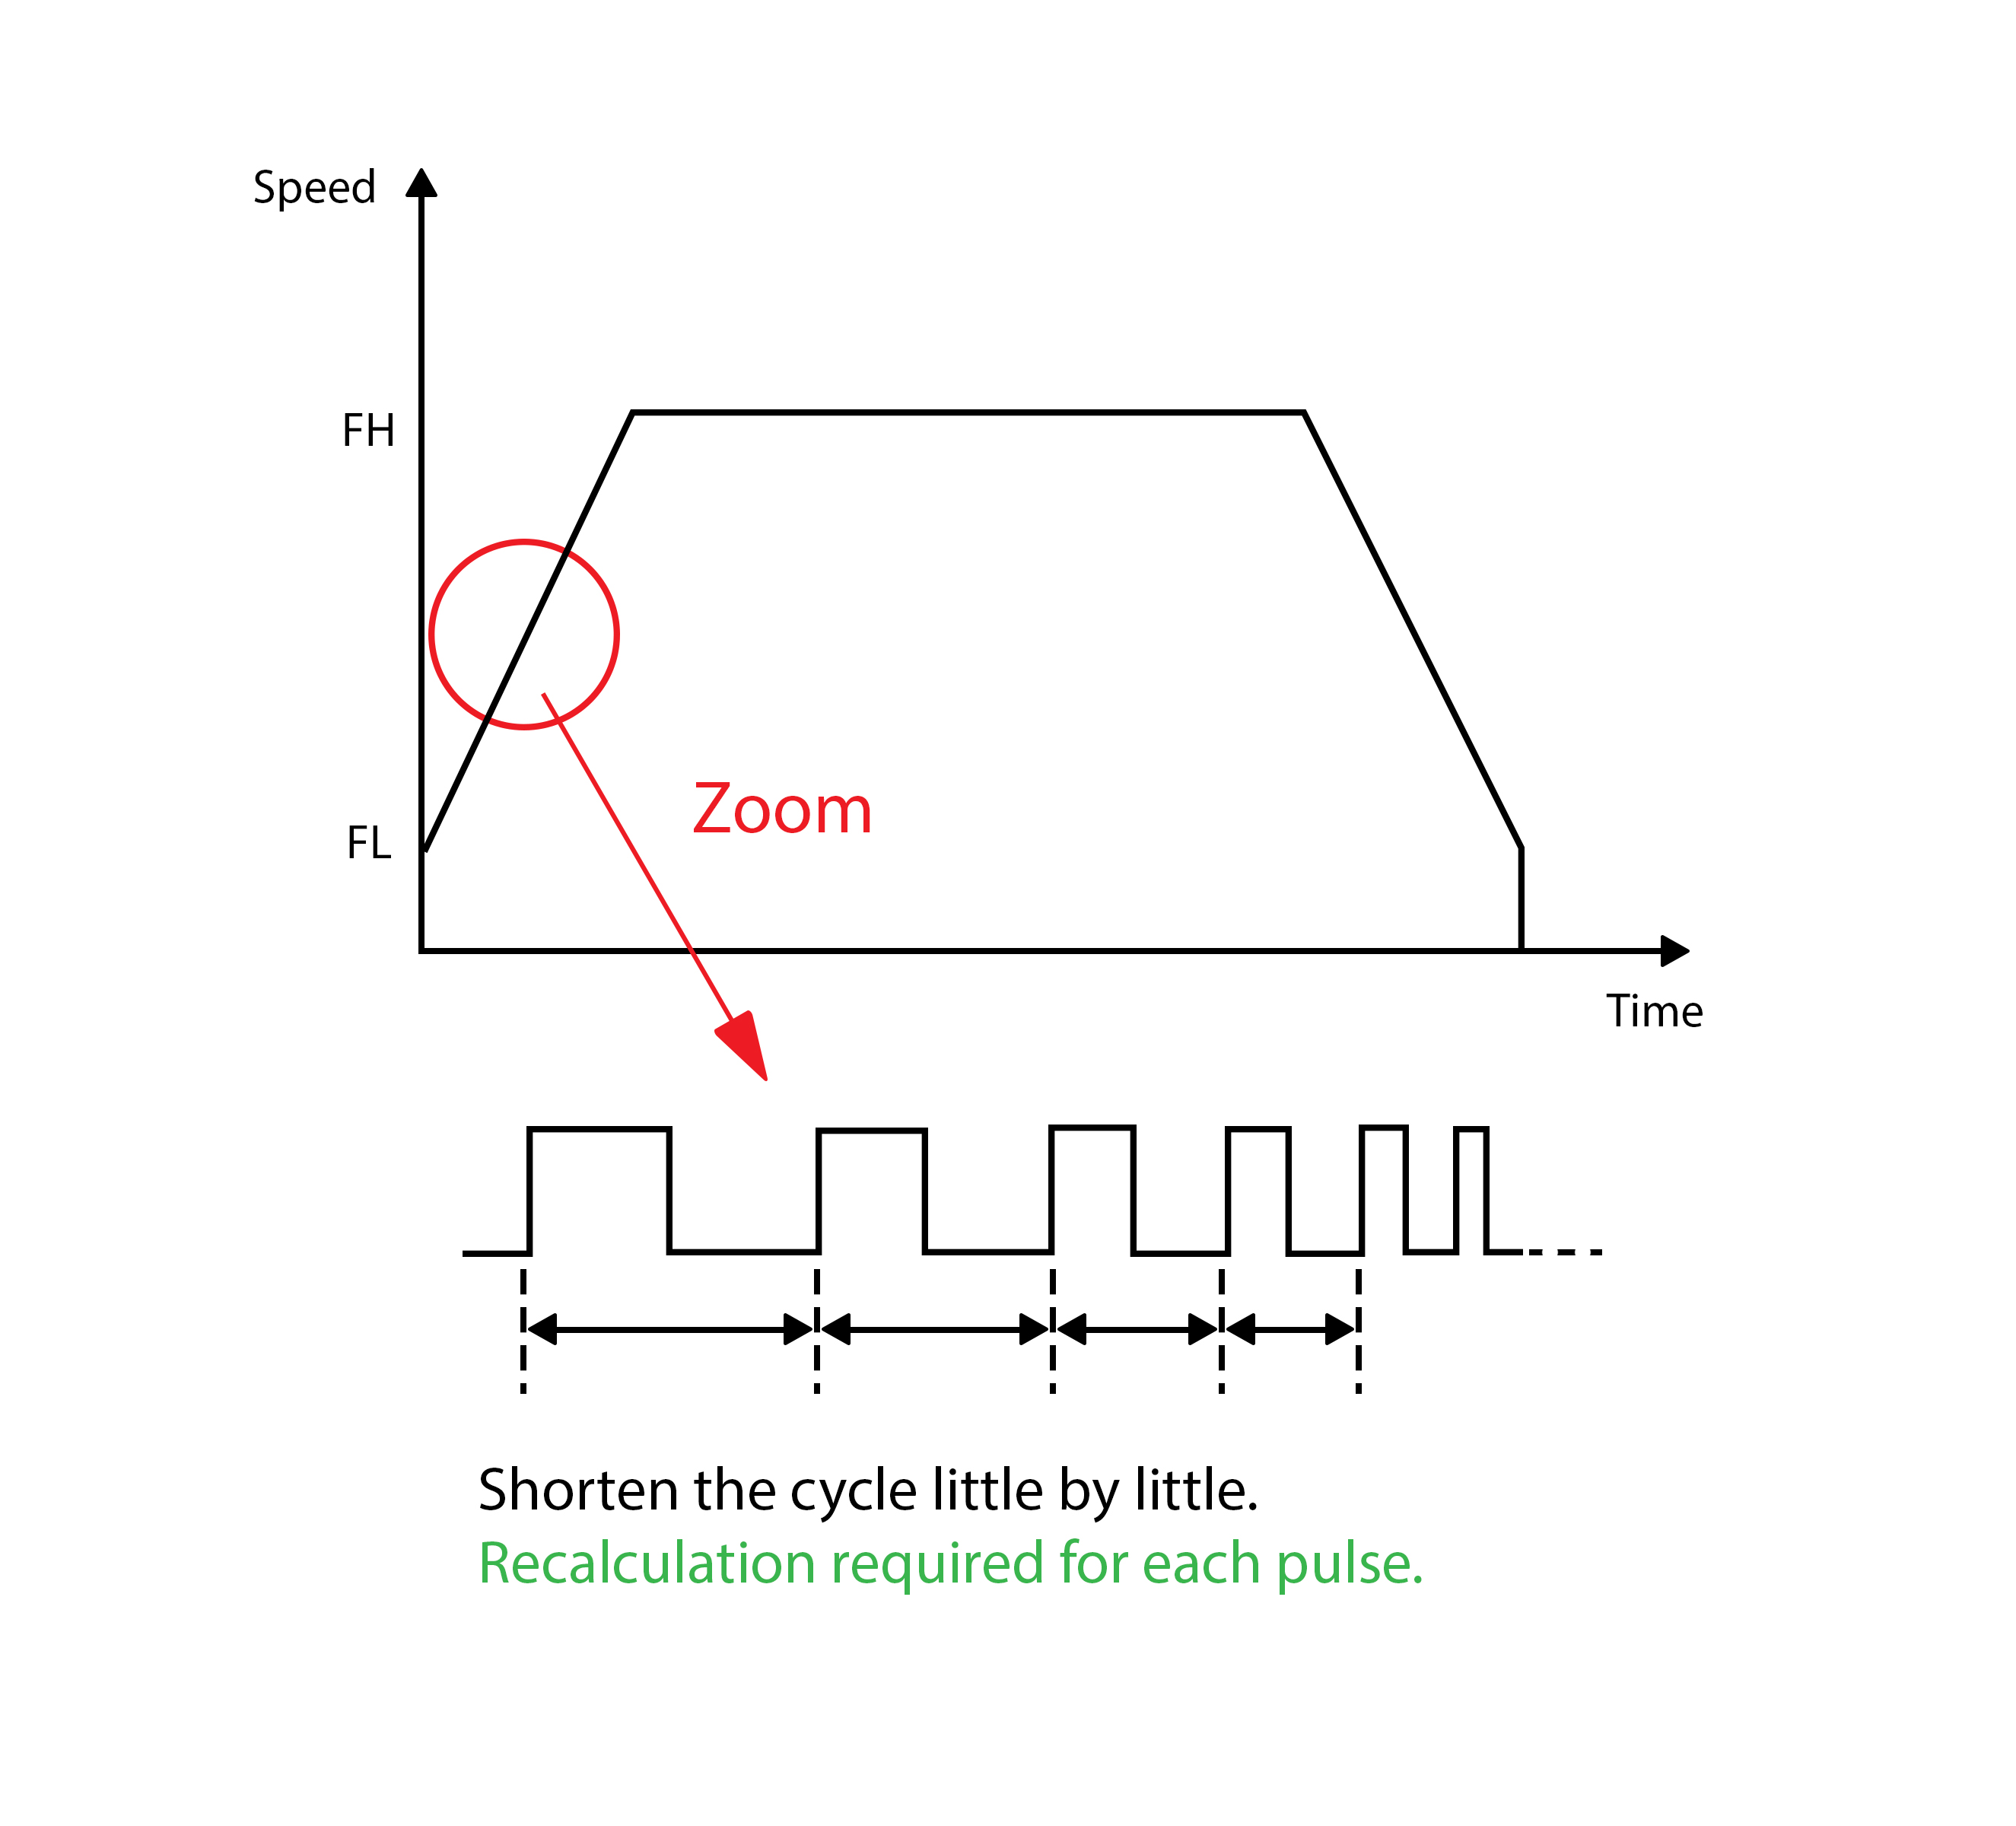 Graph of linear acceleration/deceleration